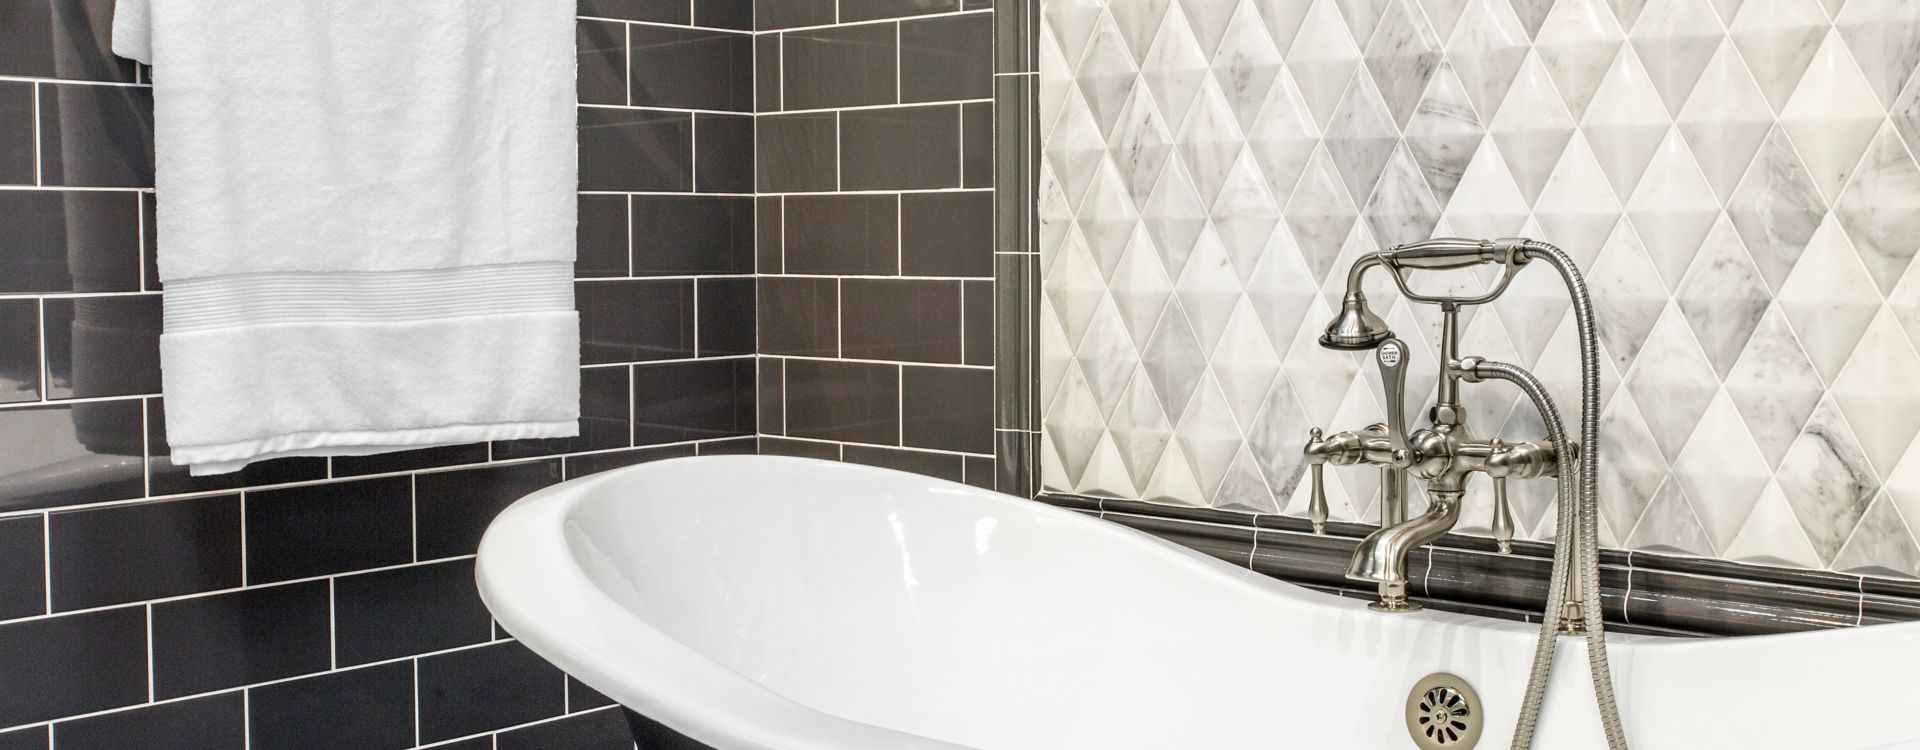 Ceramic Tile In Bathroom Ideas : 37 Best Bathroom Tile Ideas Beautiful ...